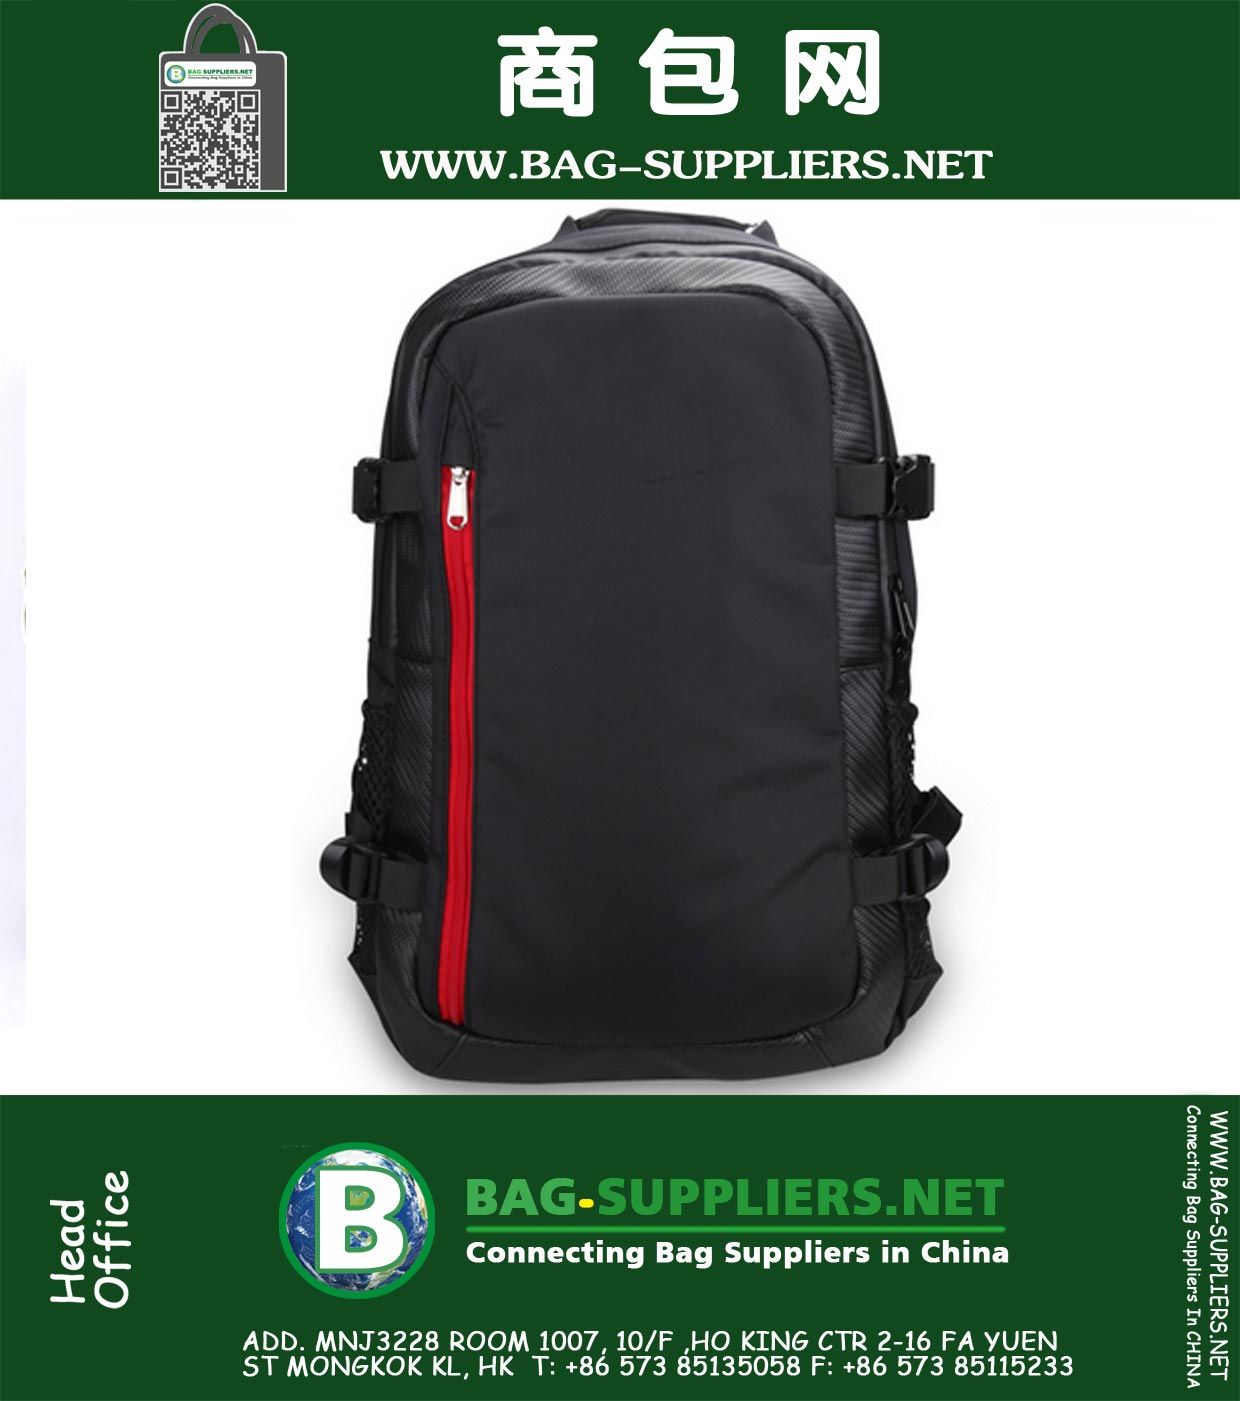 Compact DSLR Camera Bag Backpack Video Photo Bags for Nikon d3200 d3100 d5200 d7100 Canon 6D 600D Sony Digital Cameras